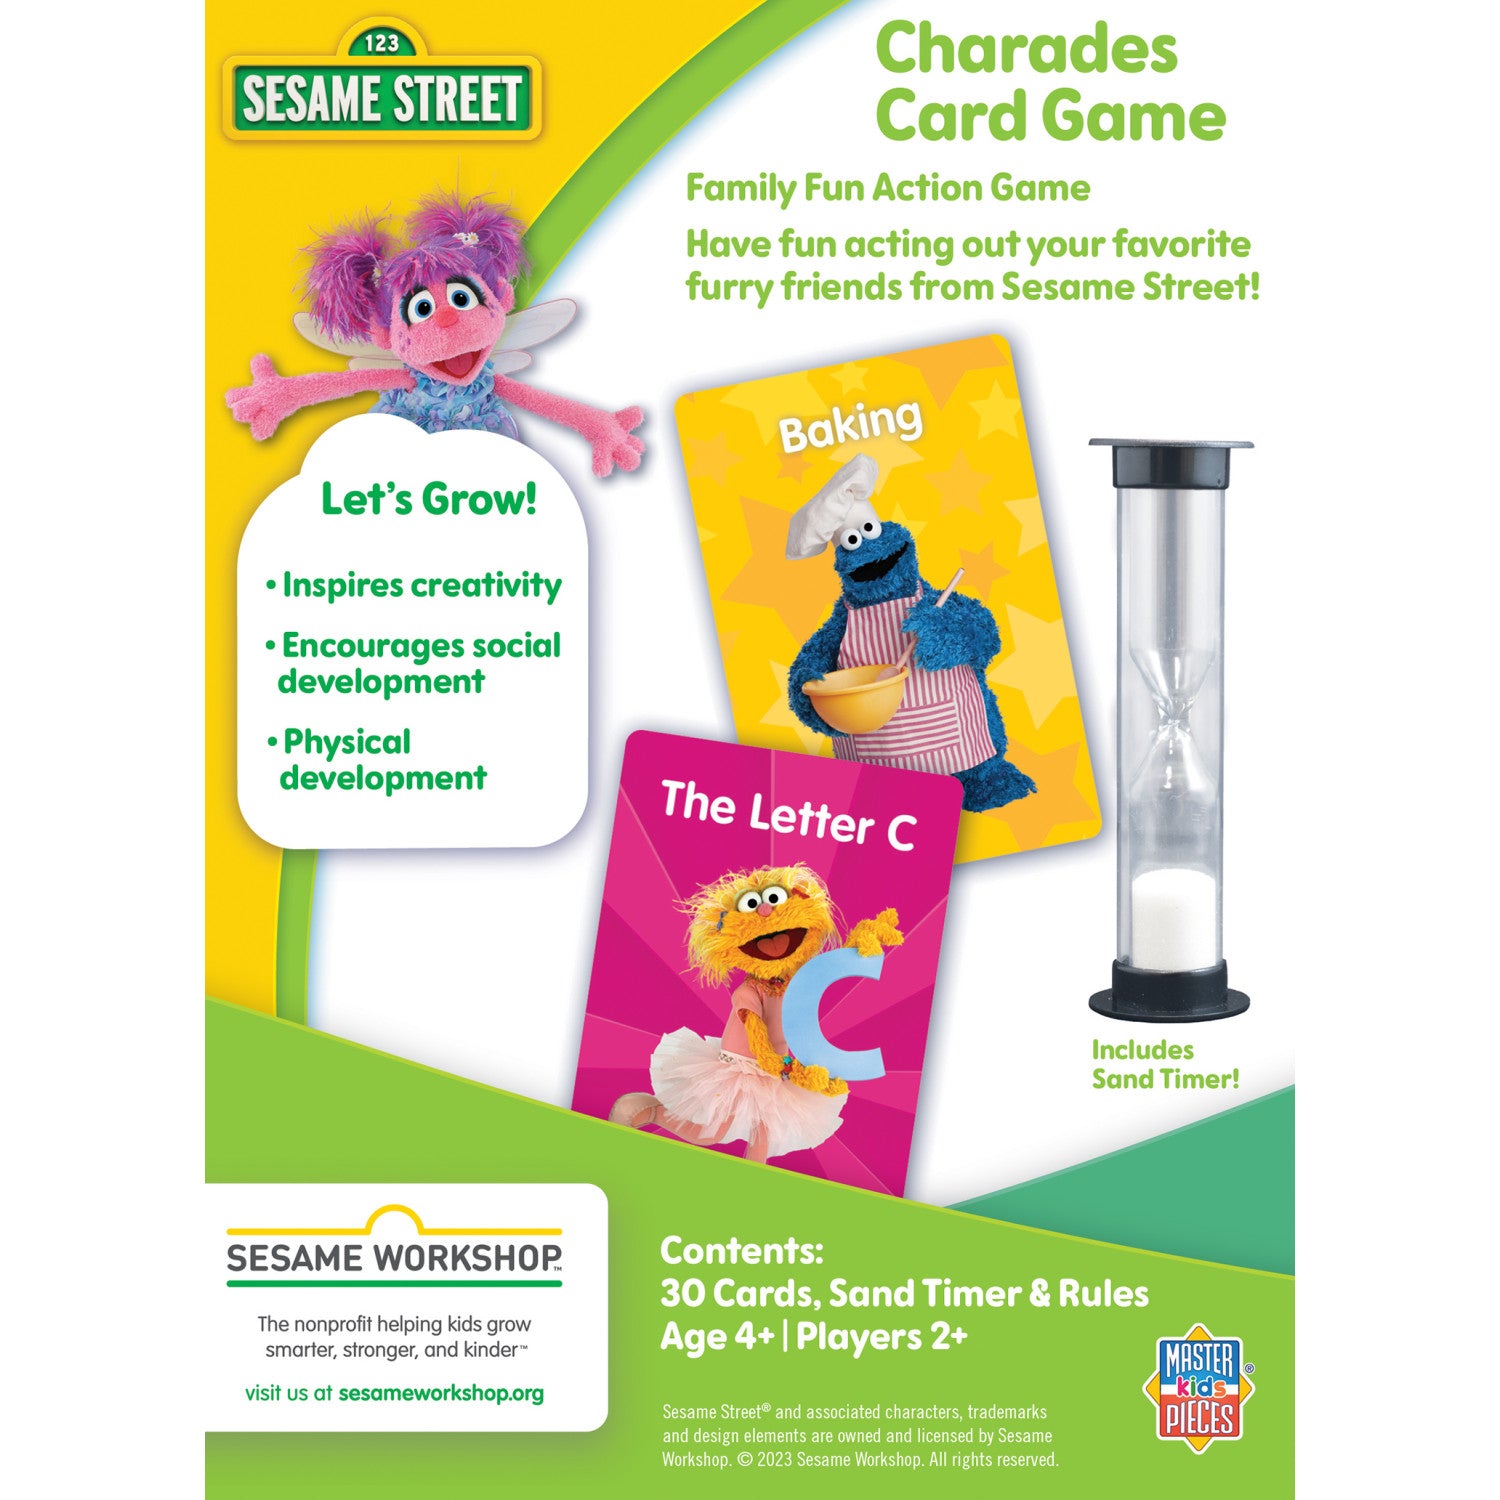 Sesame Street Charades Card Game